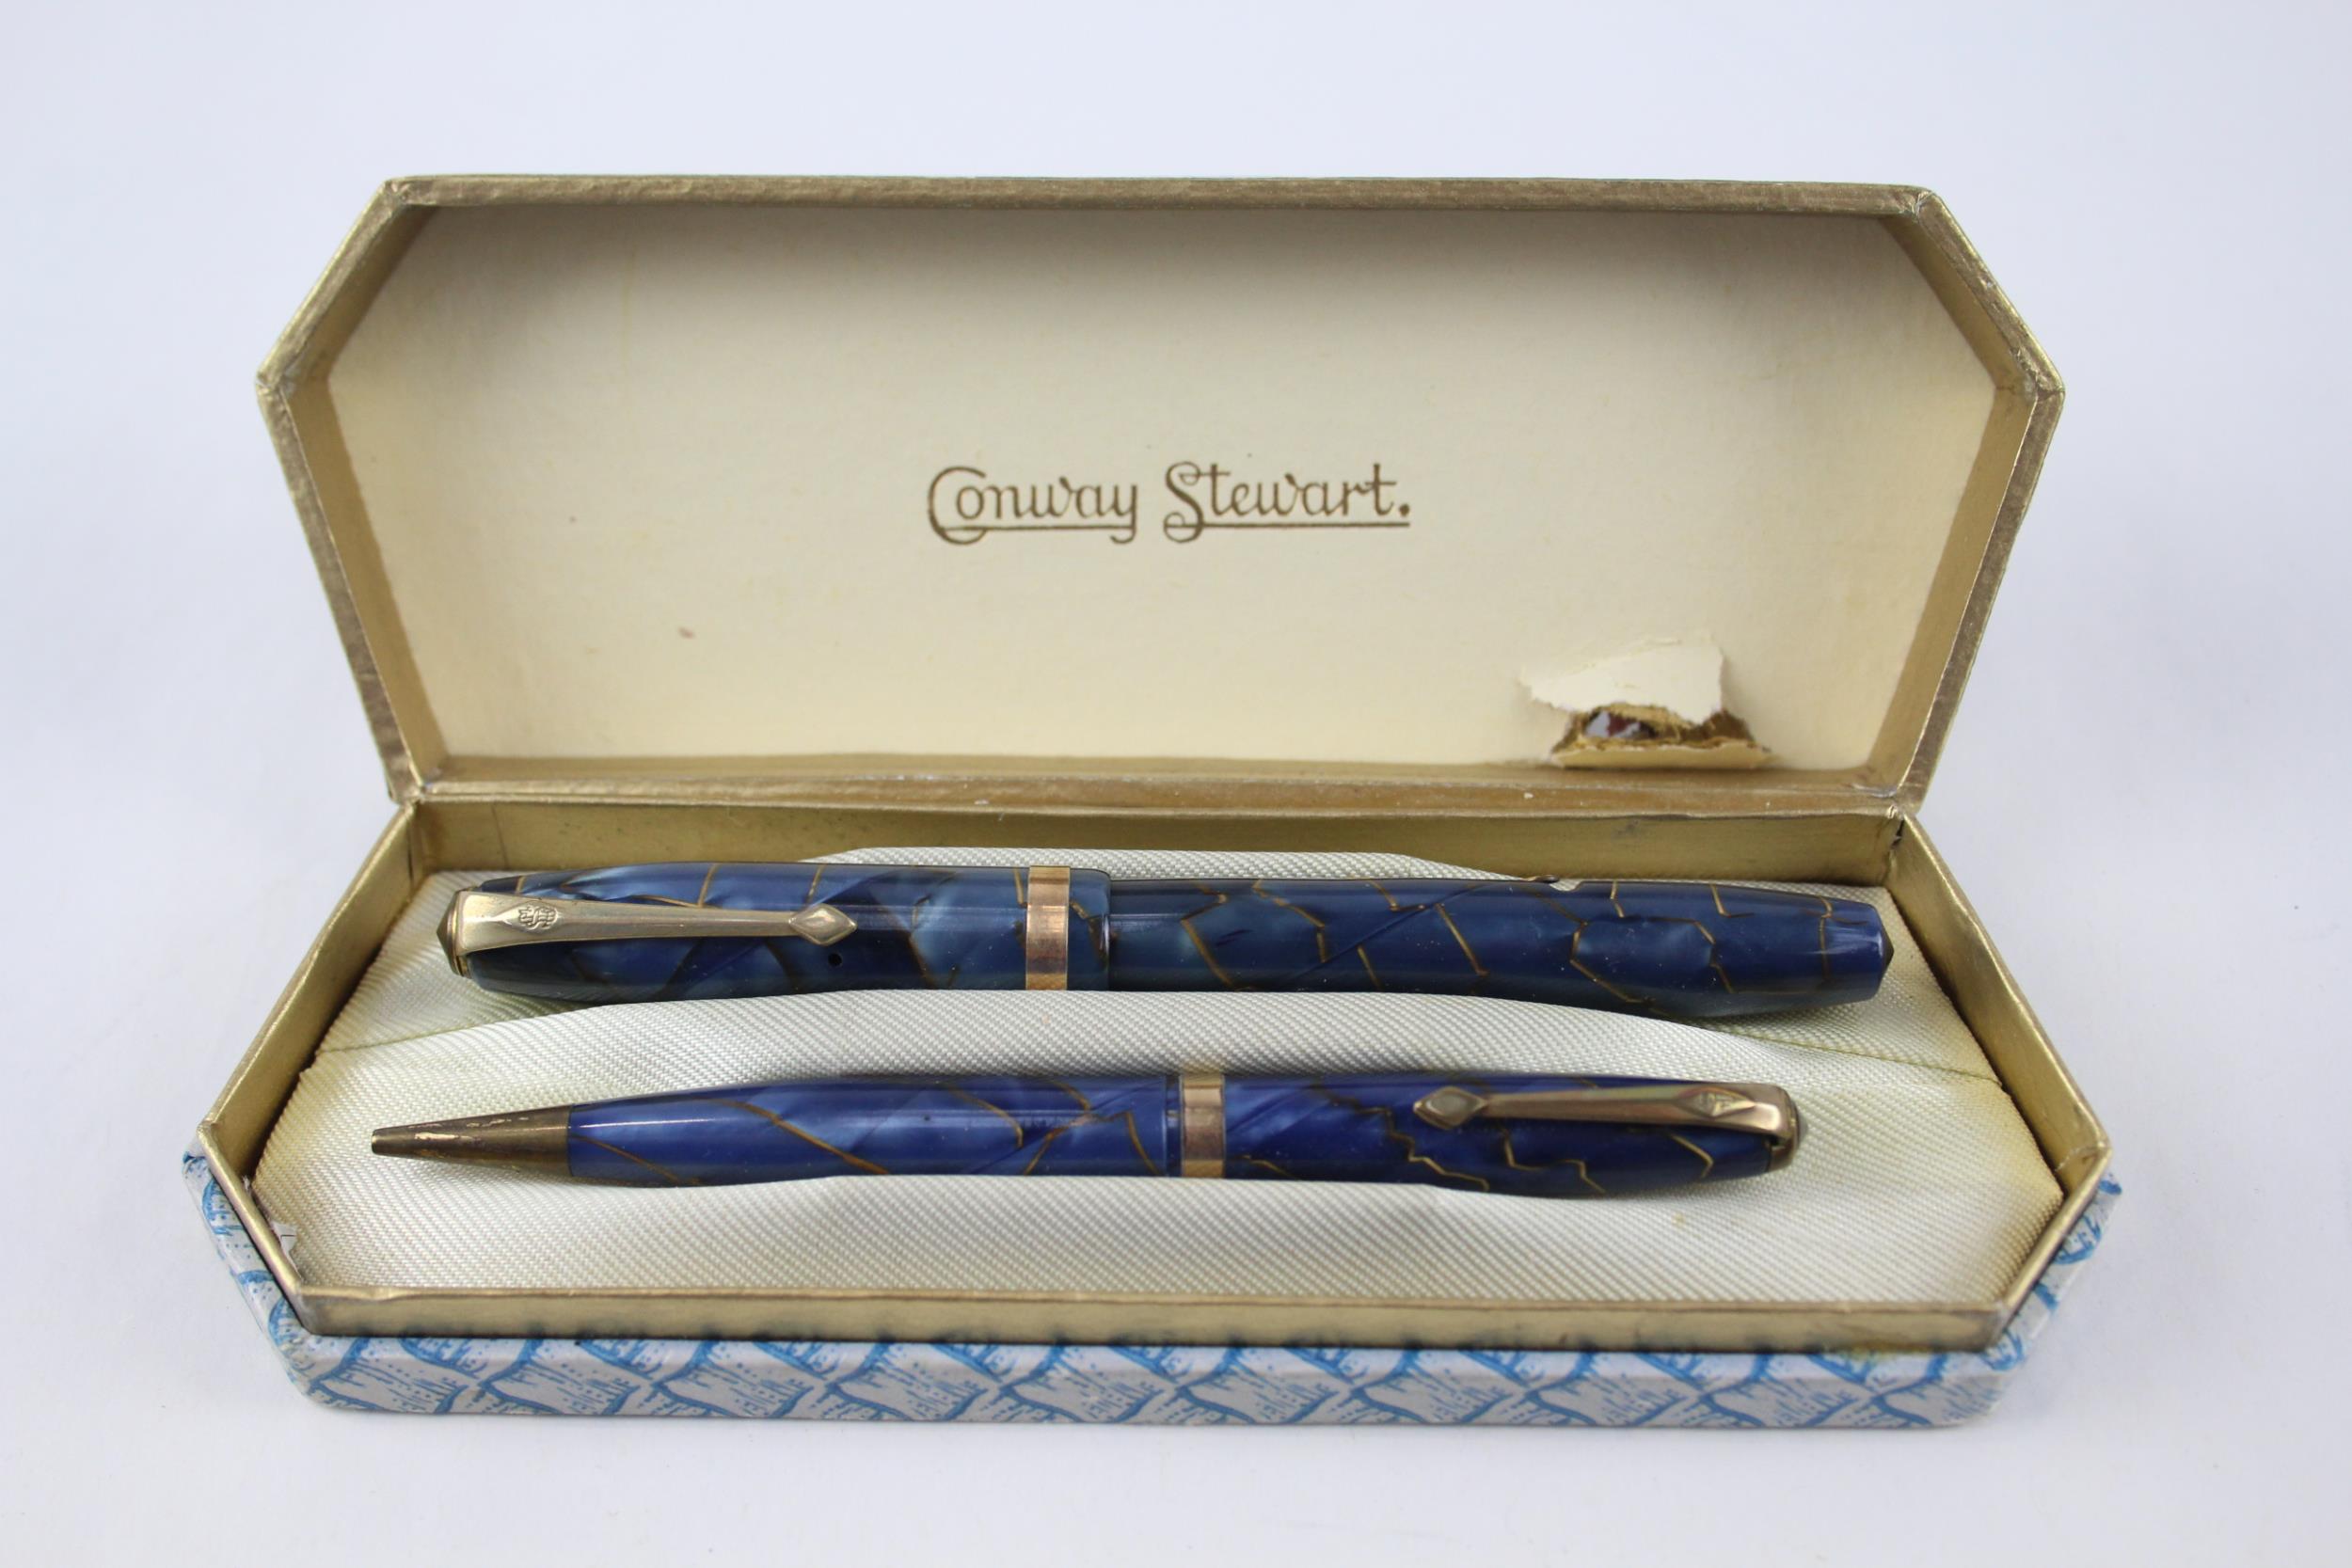 Vintage CONWAY STEWART 84 Navy Casing Fountain Pen w/ 14ct Gold Nib, Pencil Etc - w/ 14ct Gold